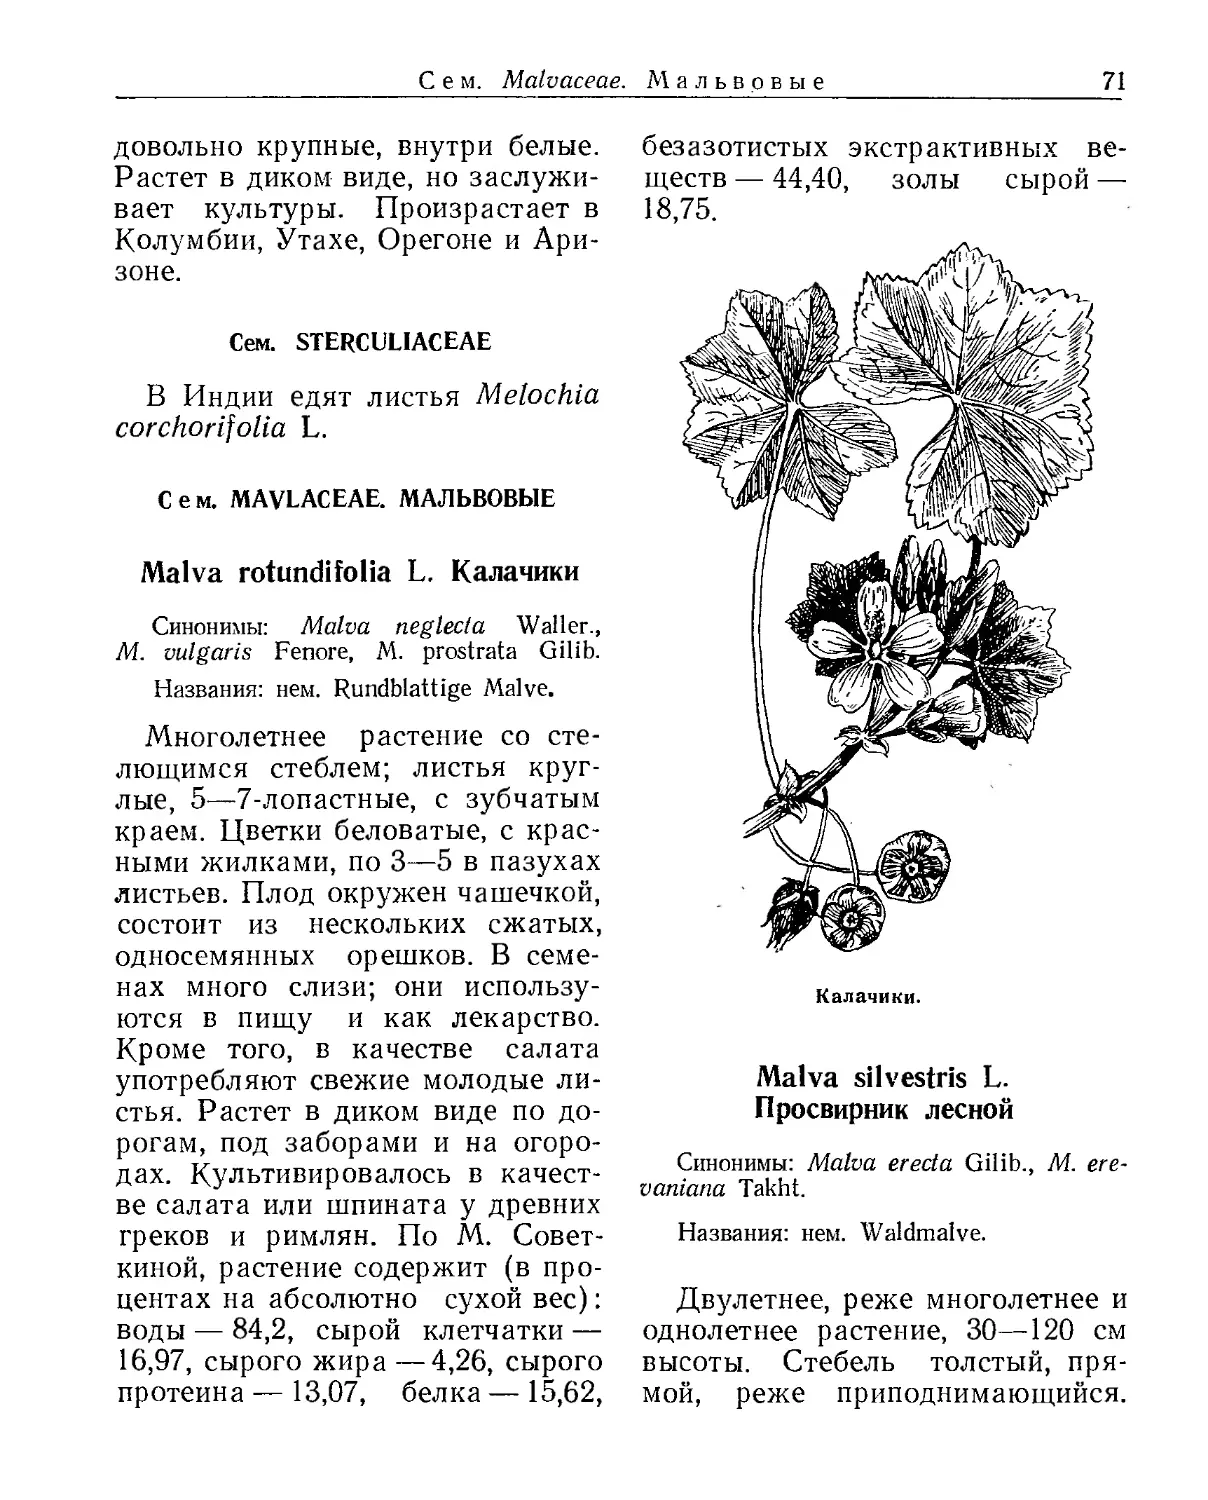 Сем. Sterculiaceae
Сем. Malvaceae. Мальвовые